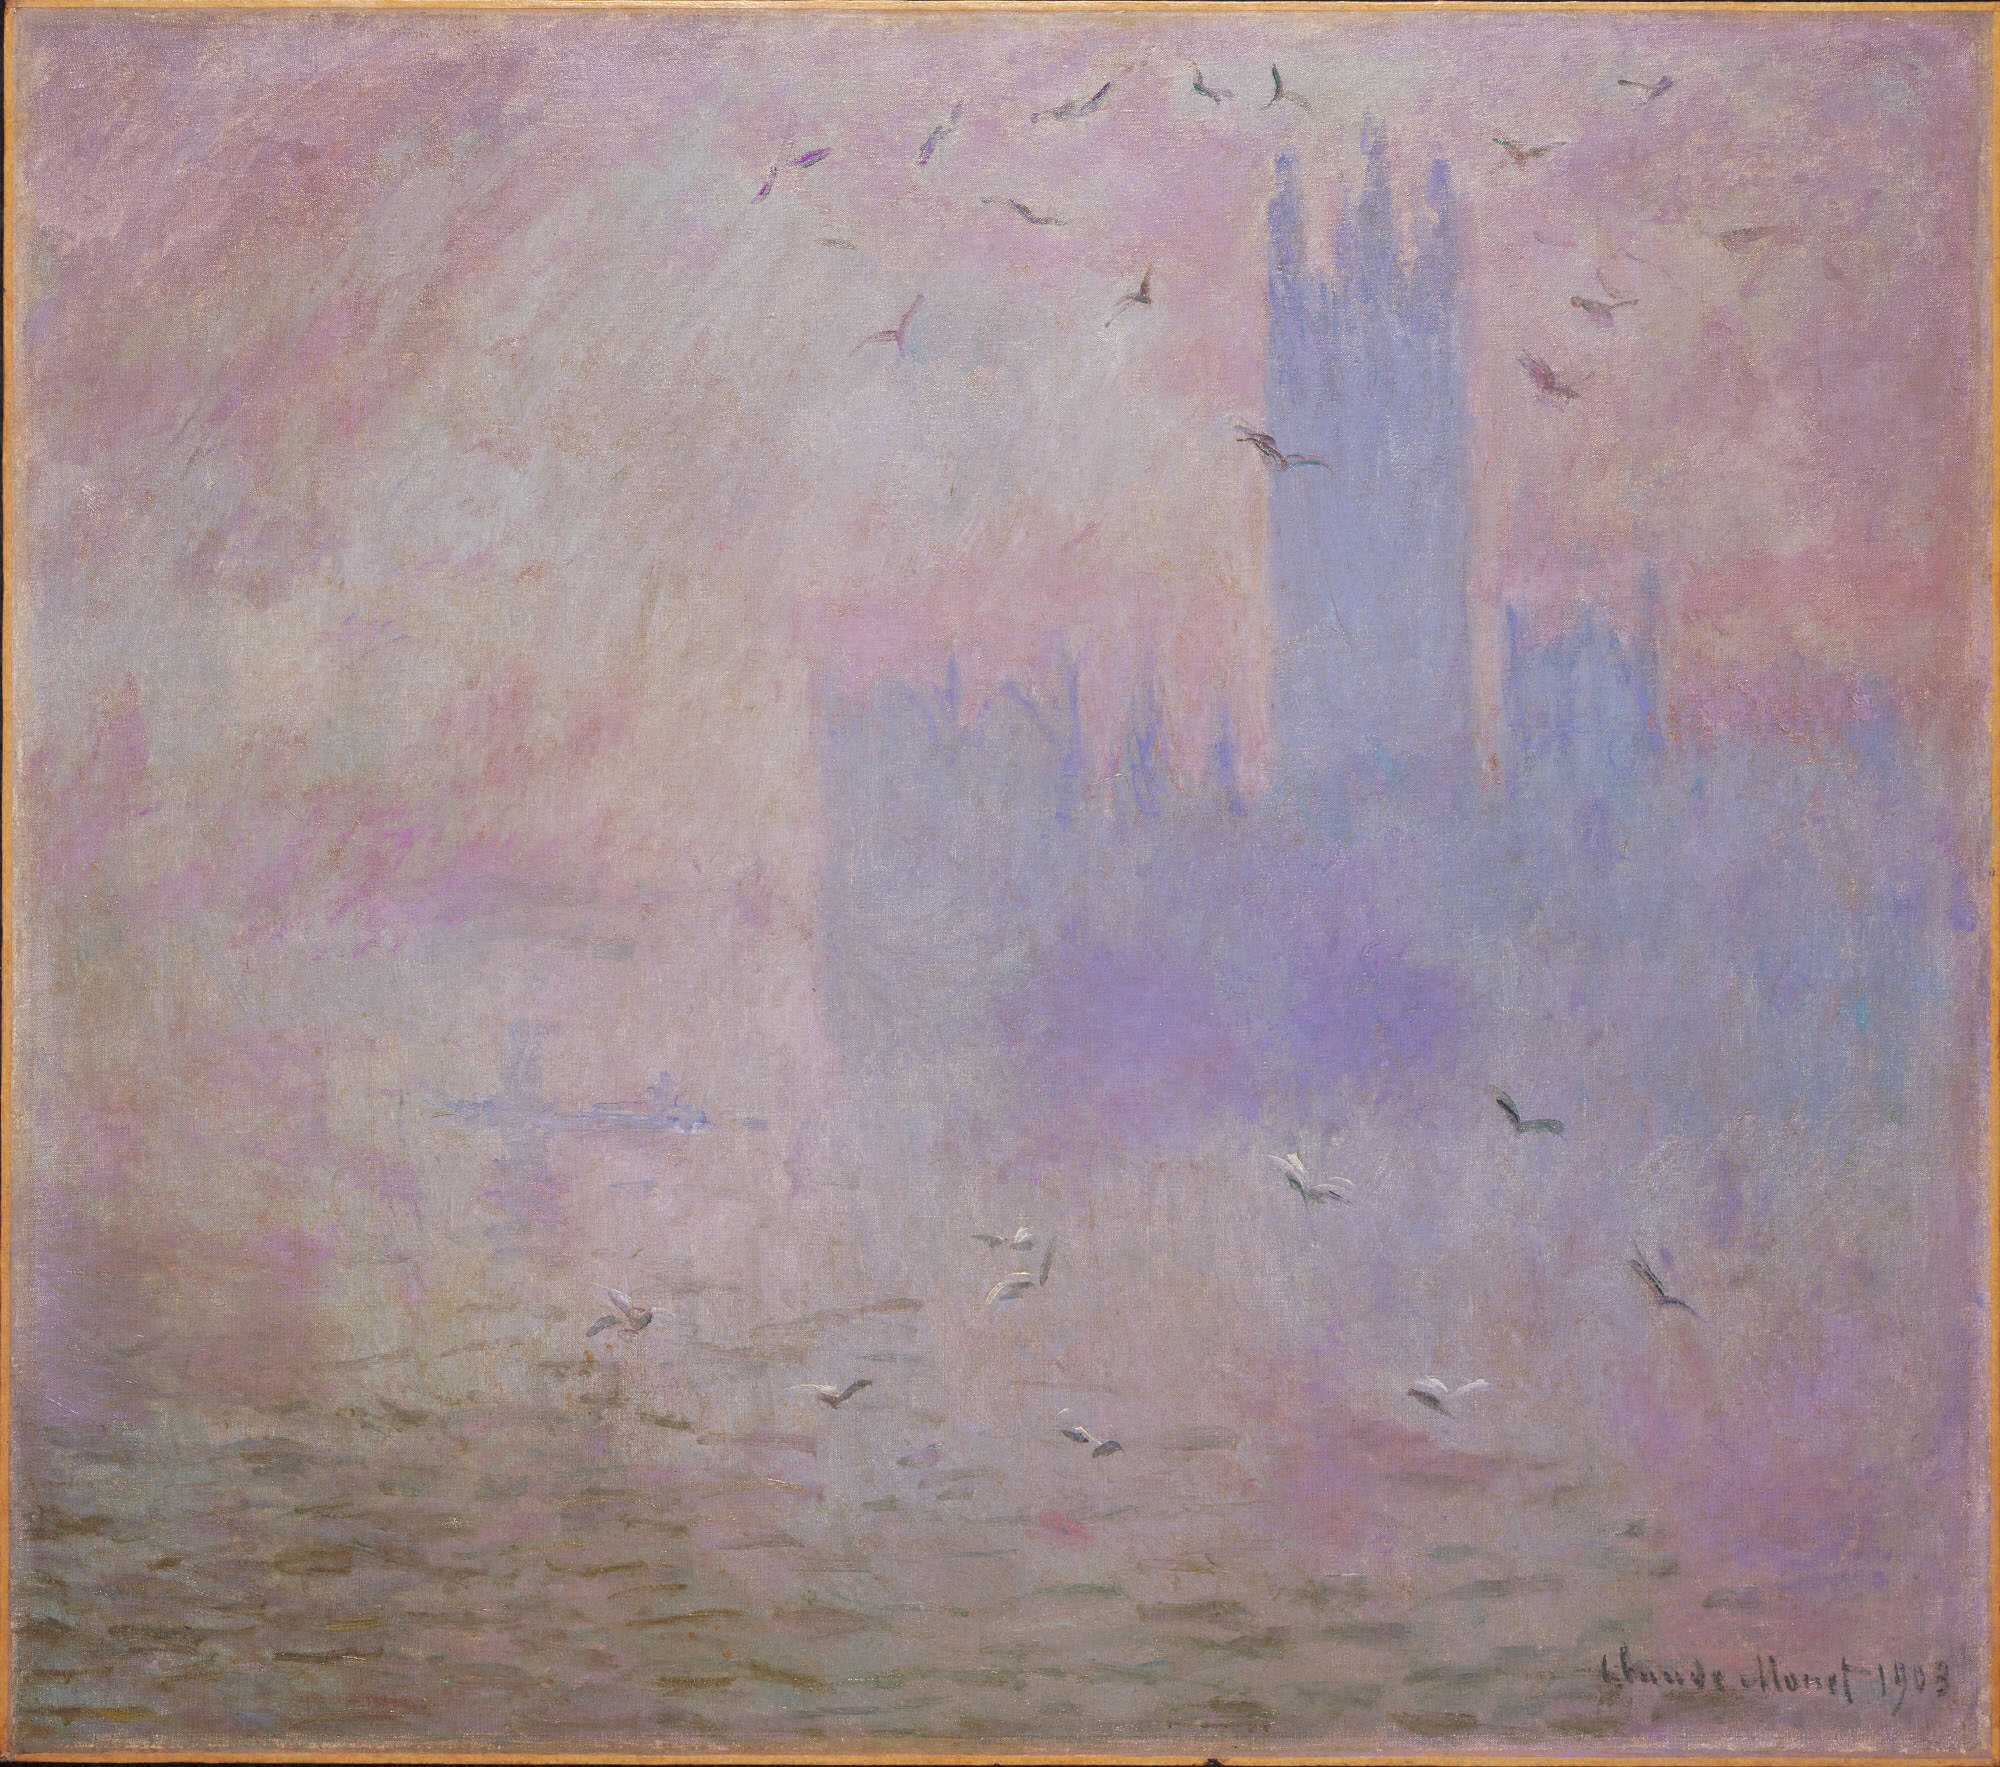 5 Monet,_Claude,_Houses_of_Parliament,_Seagulls_The Houses of Parliament, Seagulls, 1903, Princeton University Art Museum